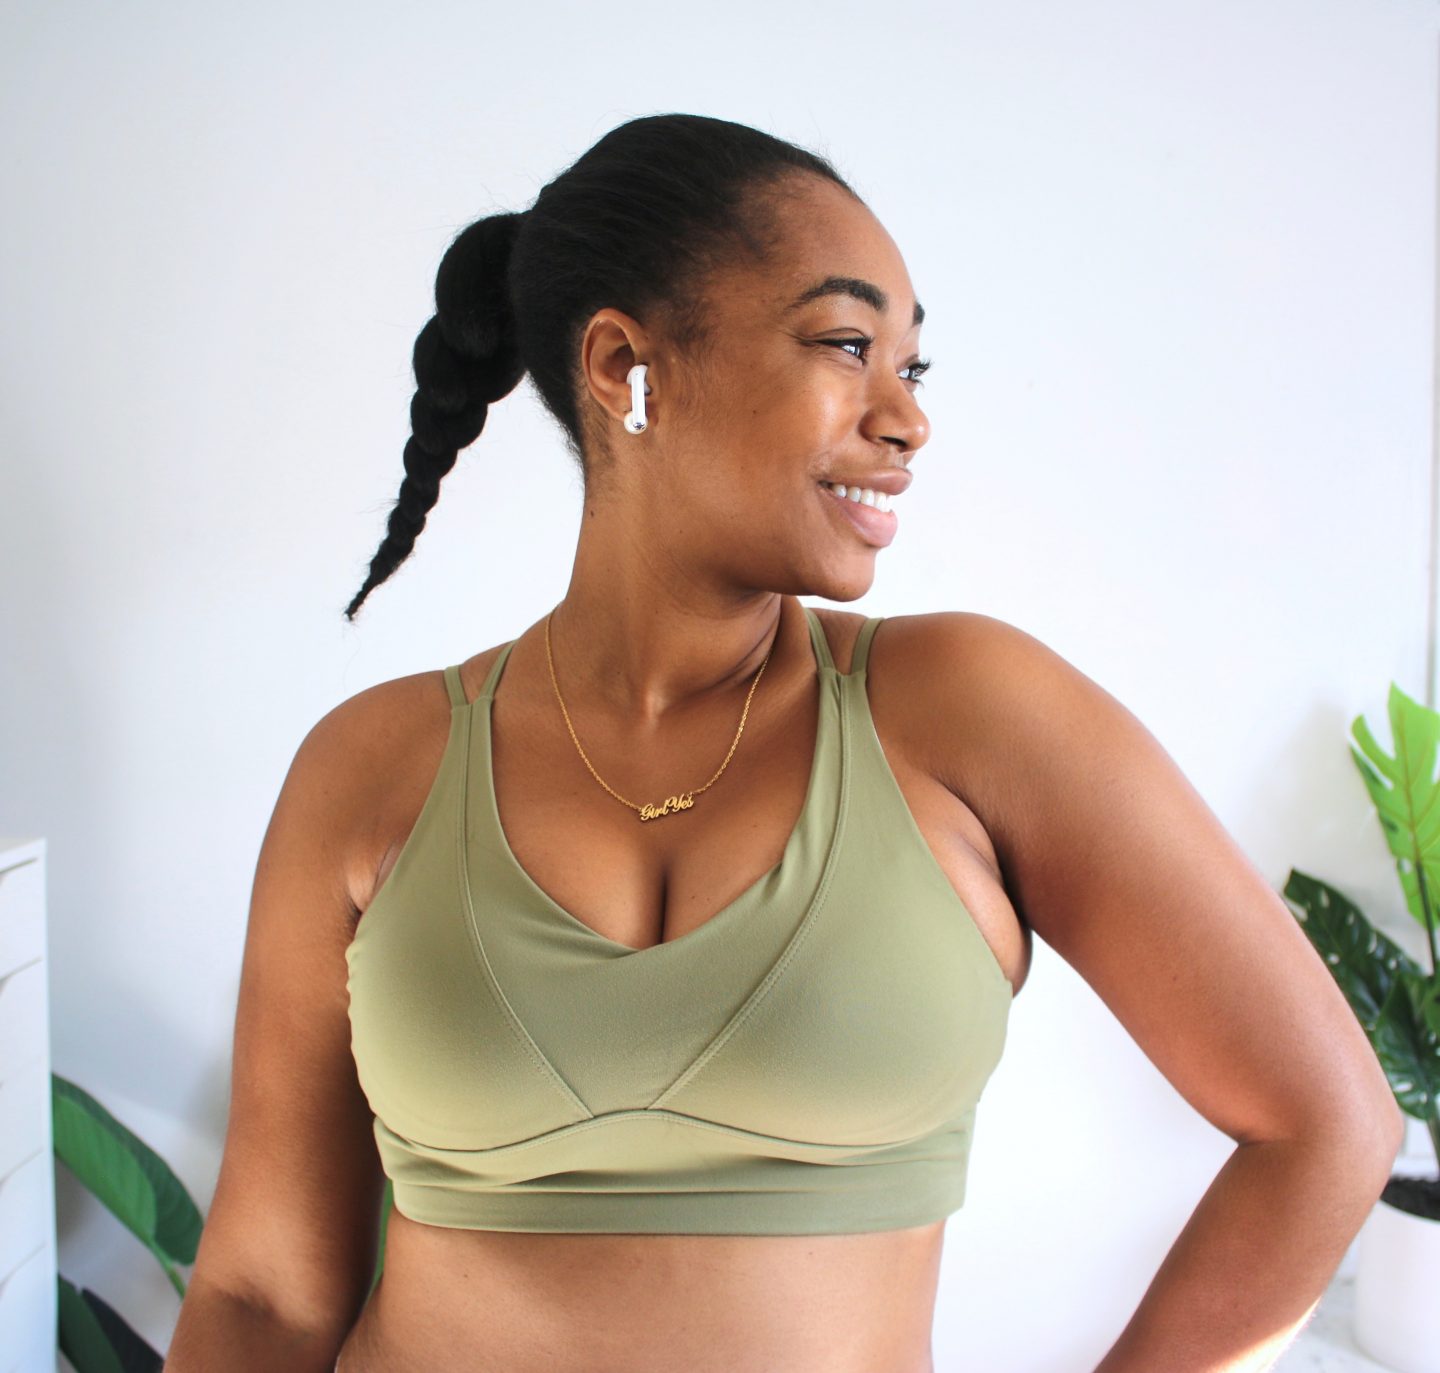 Chimere Nicole, blogger wearing Running Girl sports bra